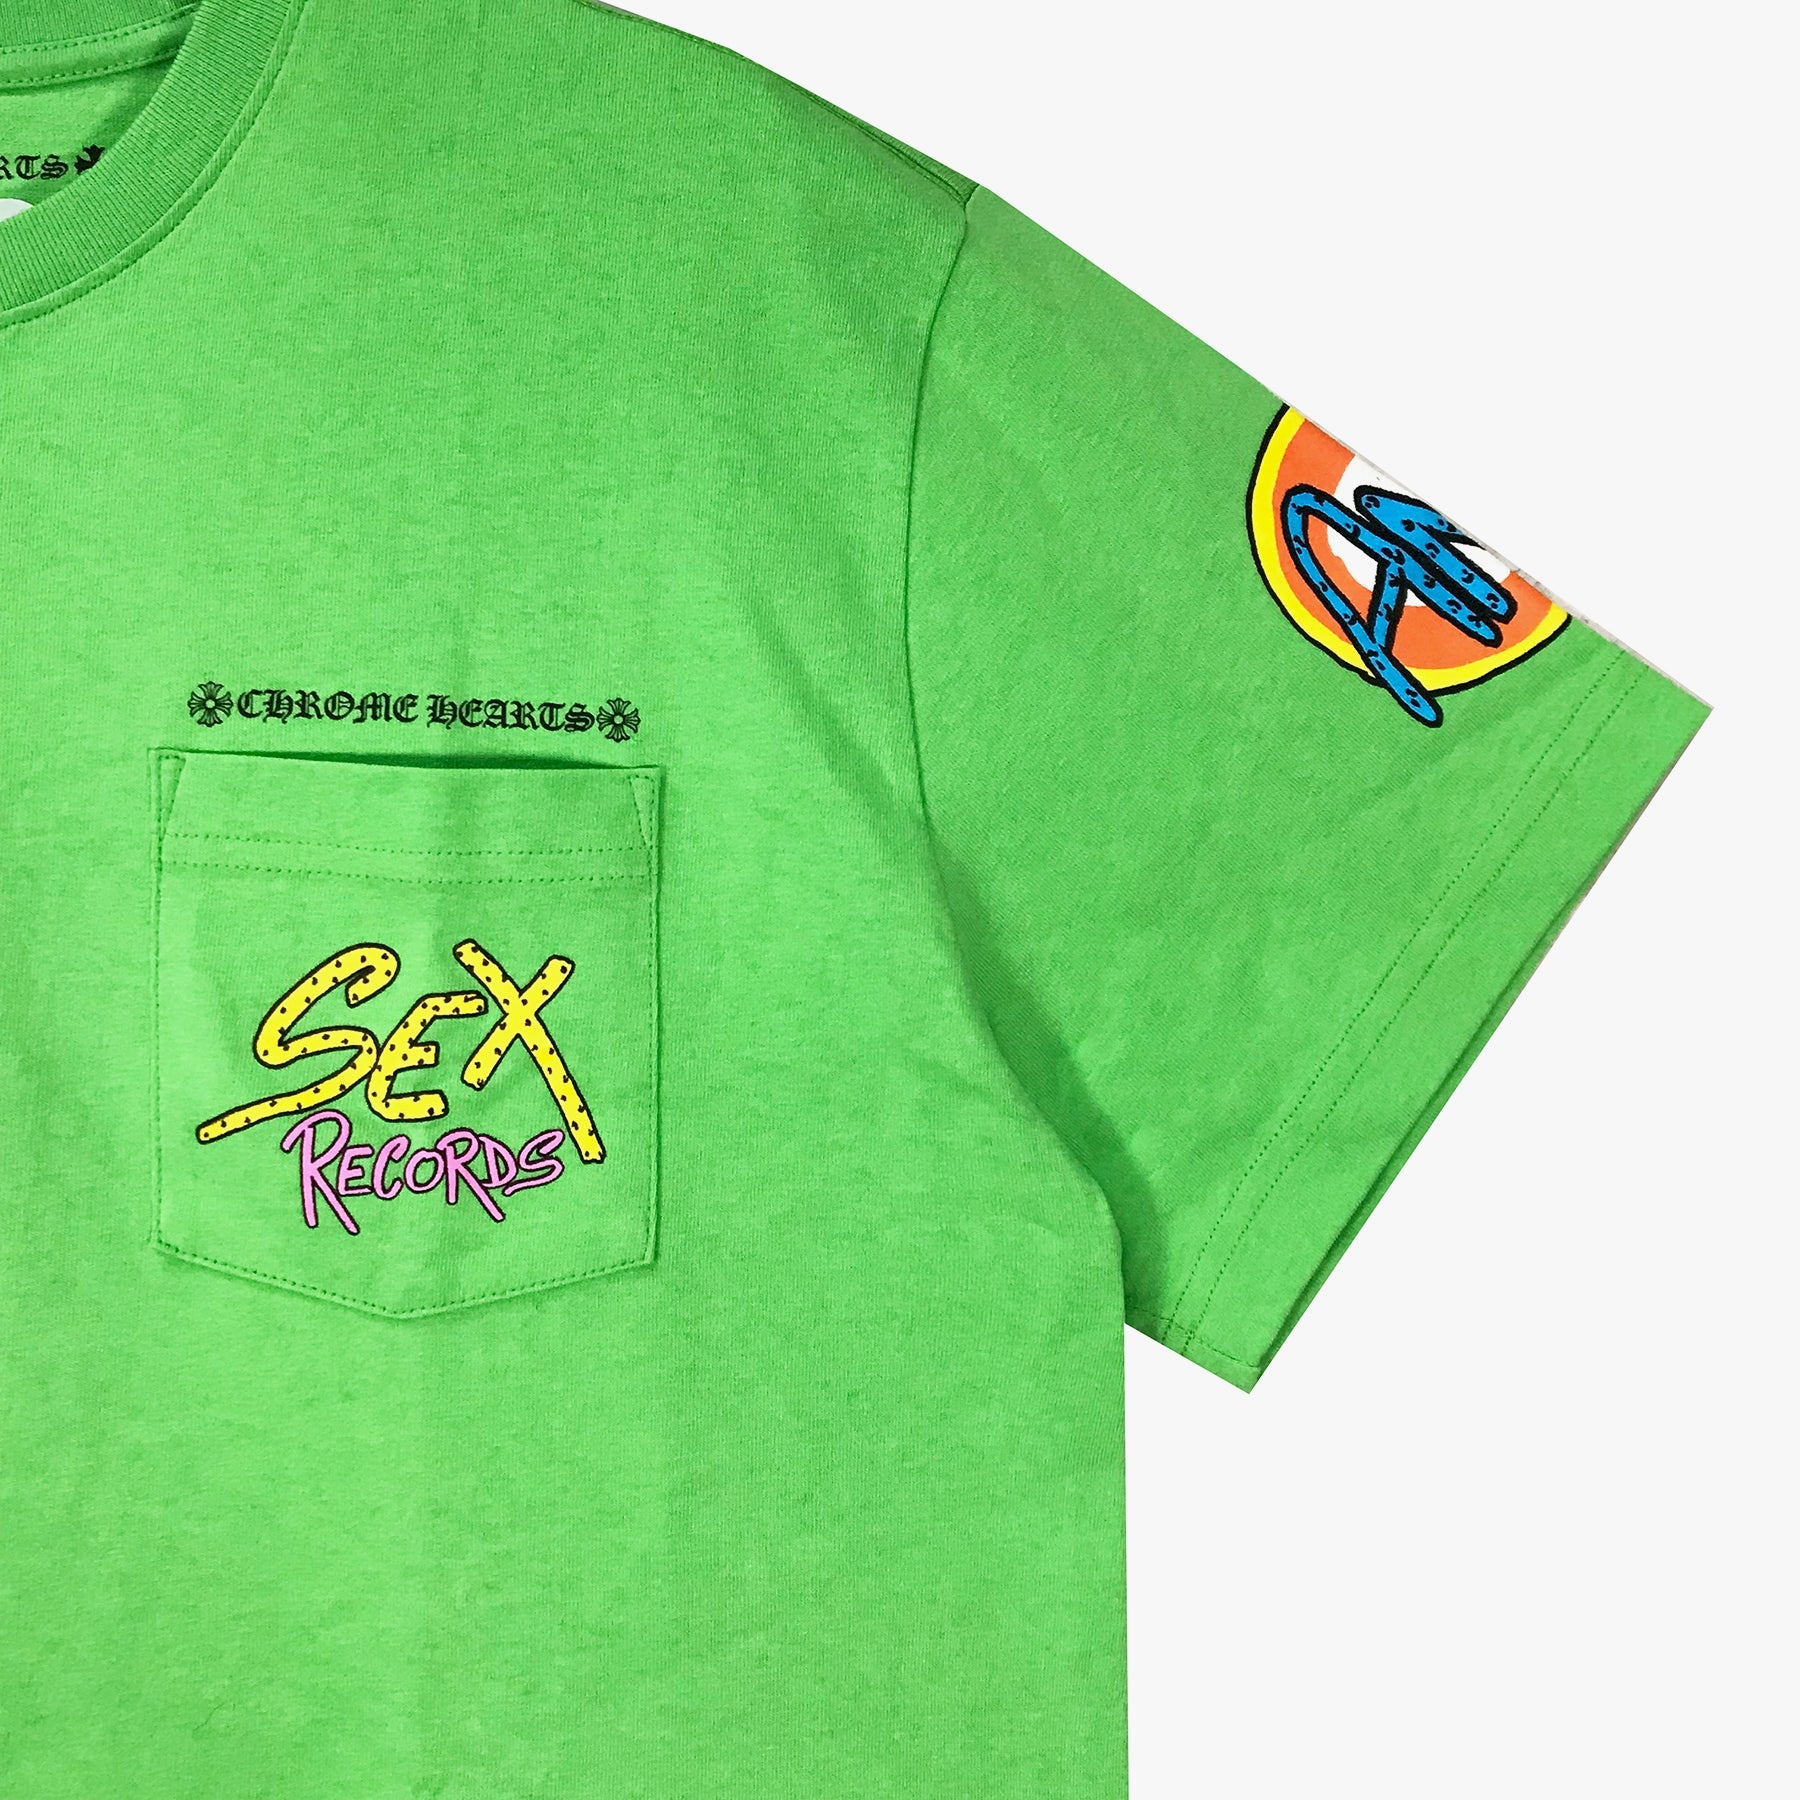 Chrome Hearts Matty Boy Limited Sex Record Green T-shirt